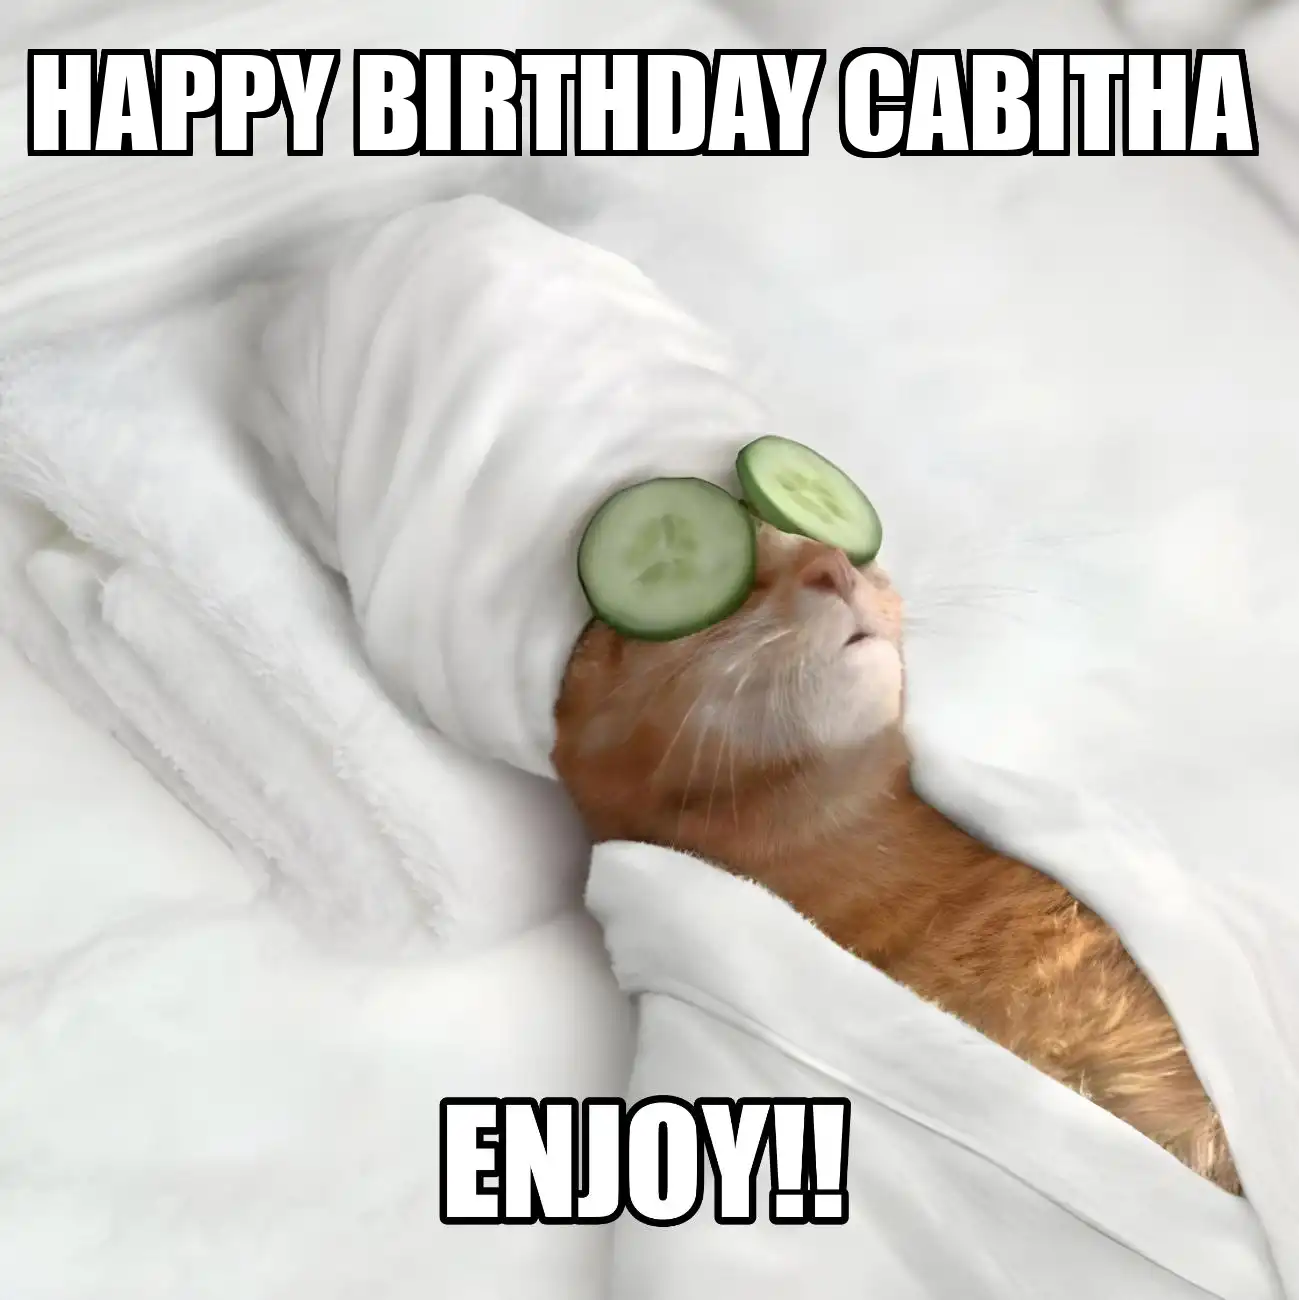 Happy Birthday Cabitha Enjoy Cat Meme